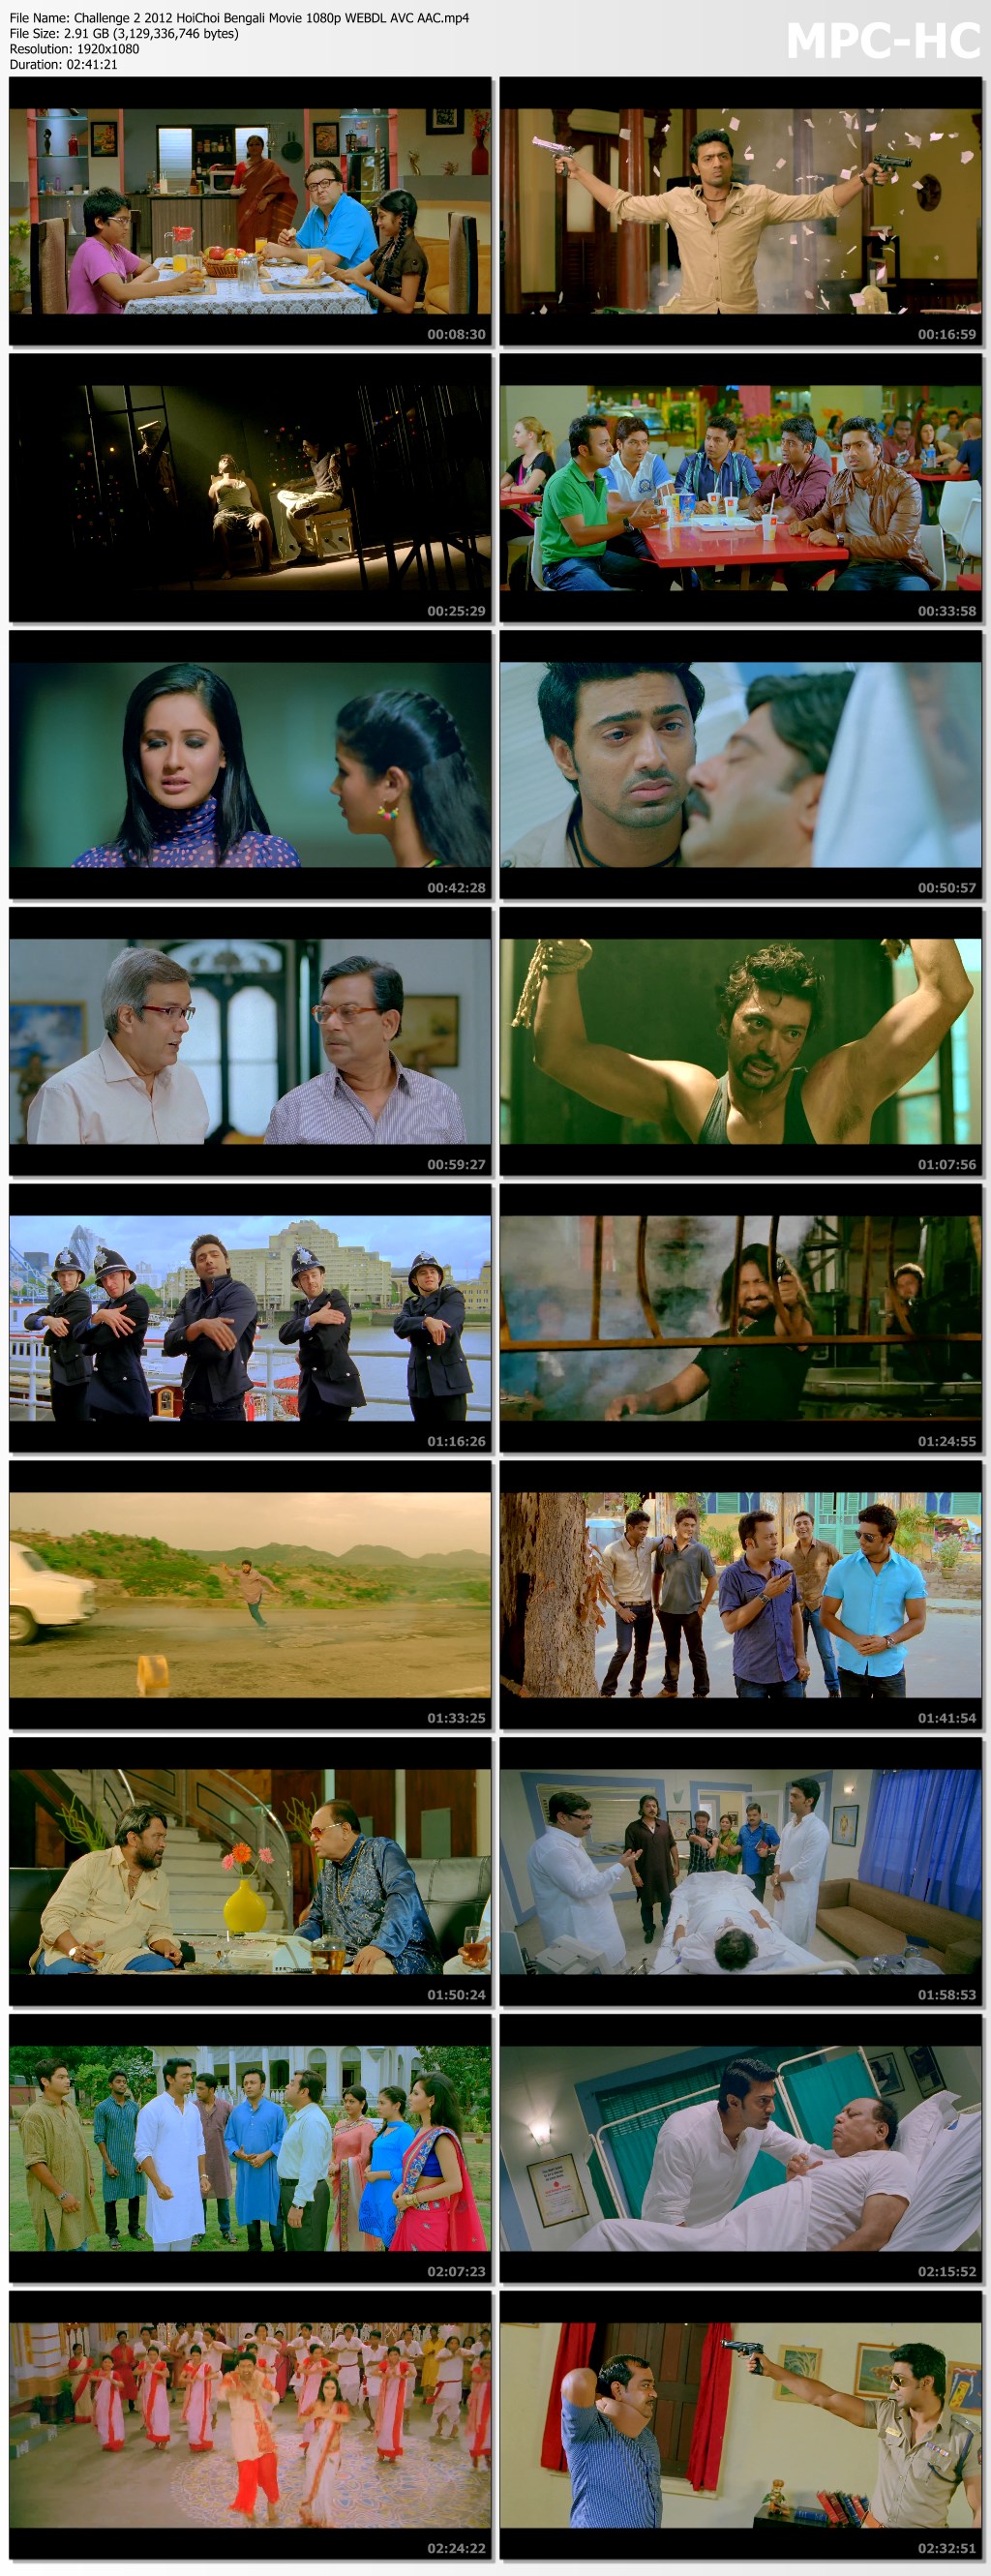 Challenge 2 2012 HoiChoi Bengali Movie 1080p WEBDL AVC AAC.mp4 thumbs